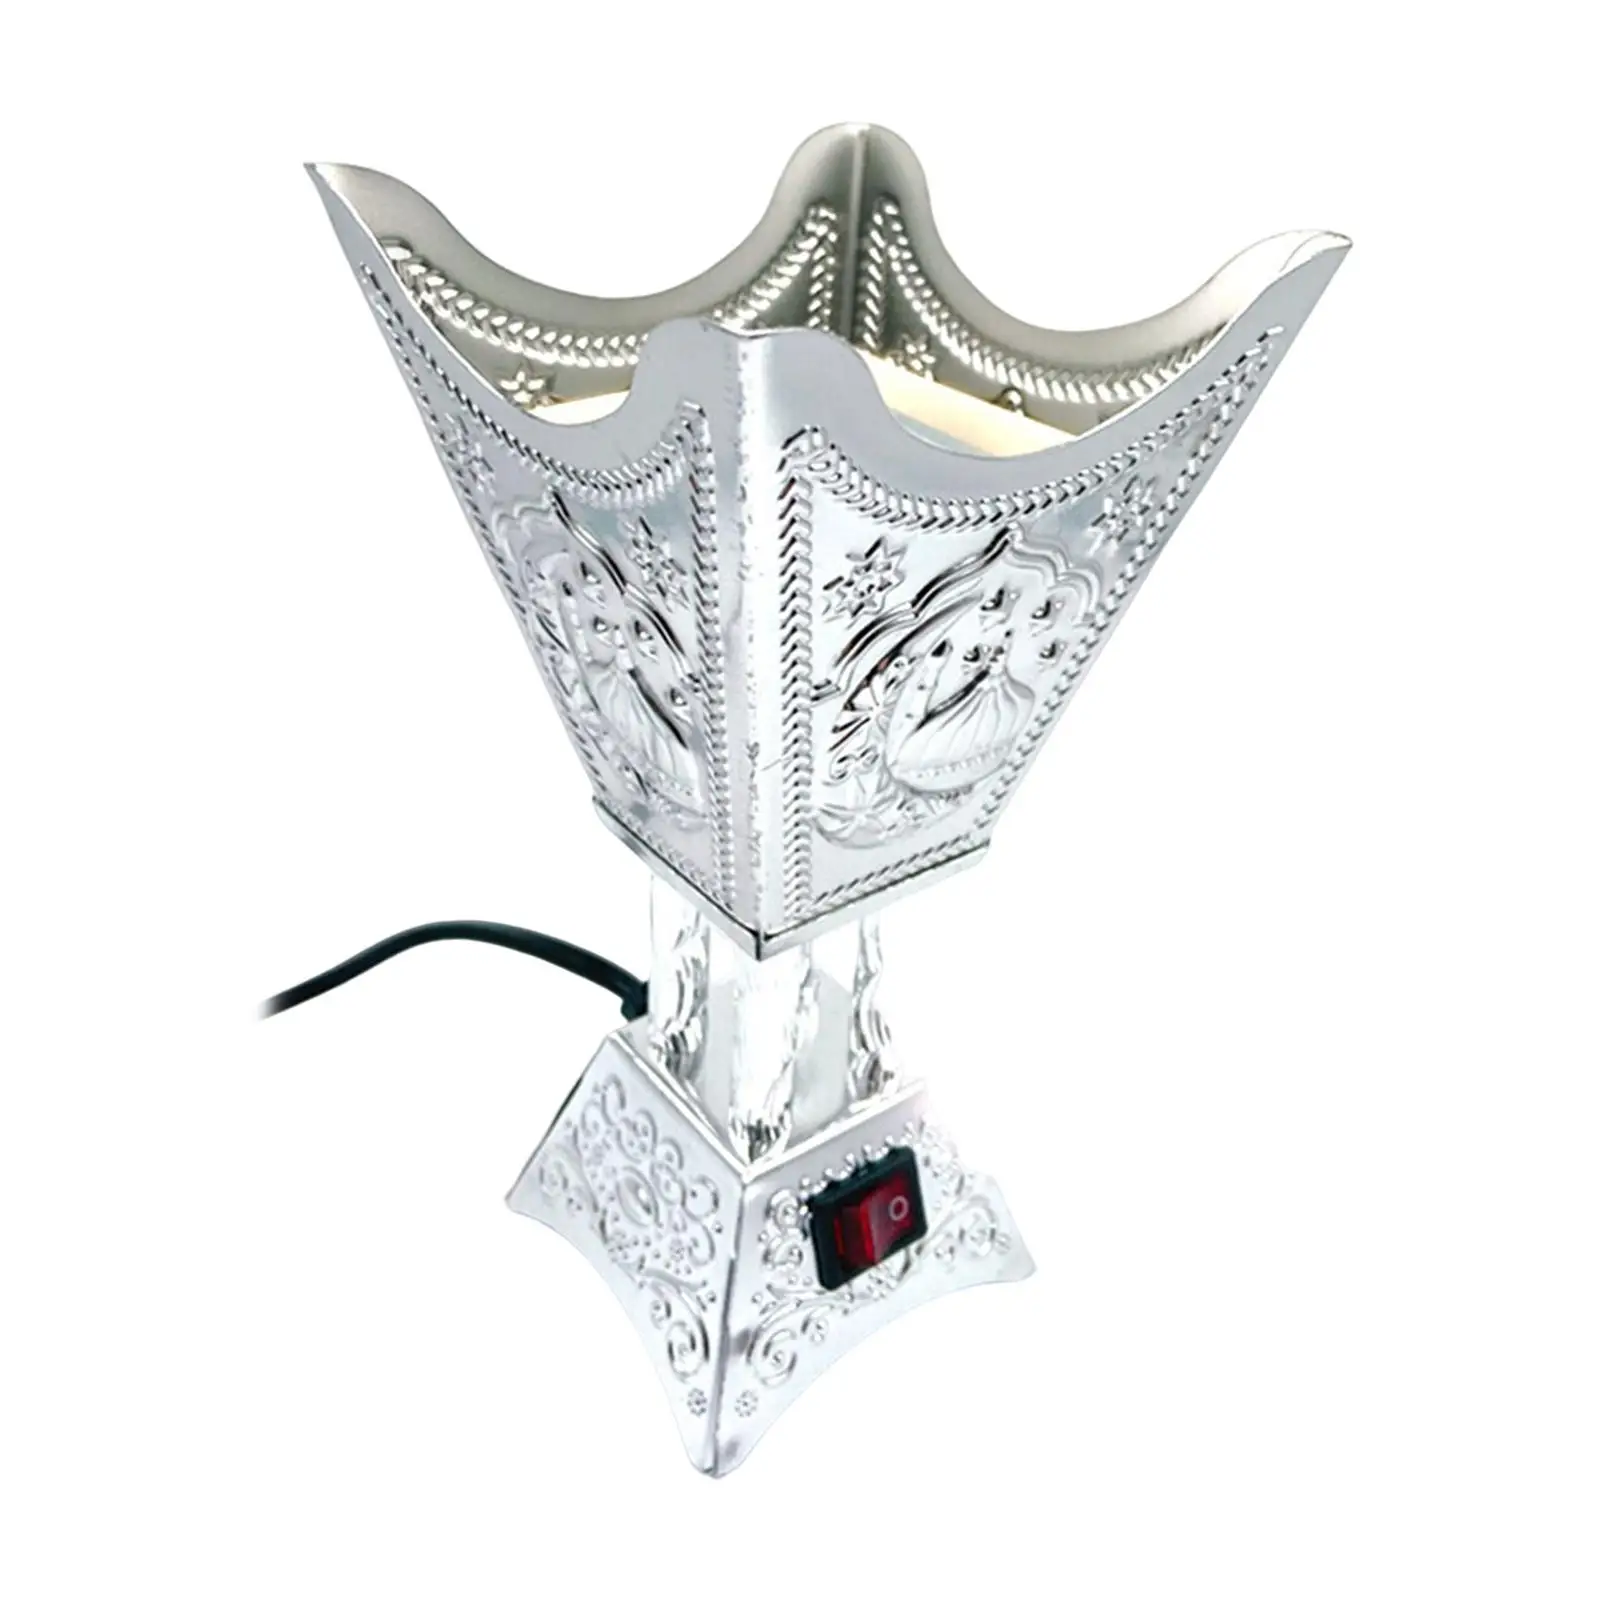 Electric Burner Ornament Arabian Style Metal Holder for Table SPA Decor